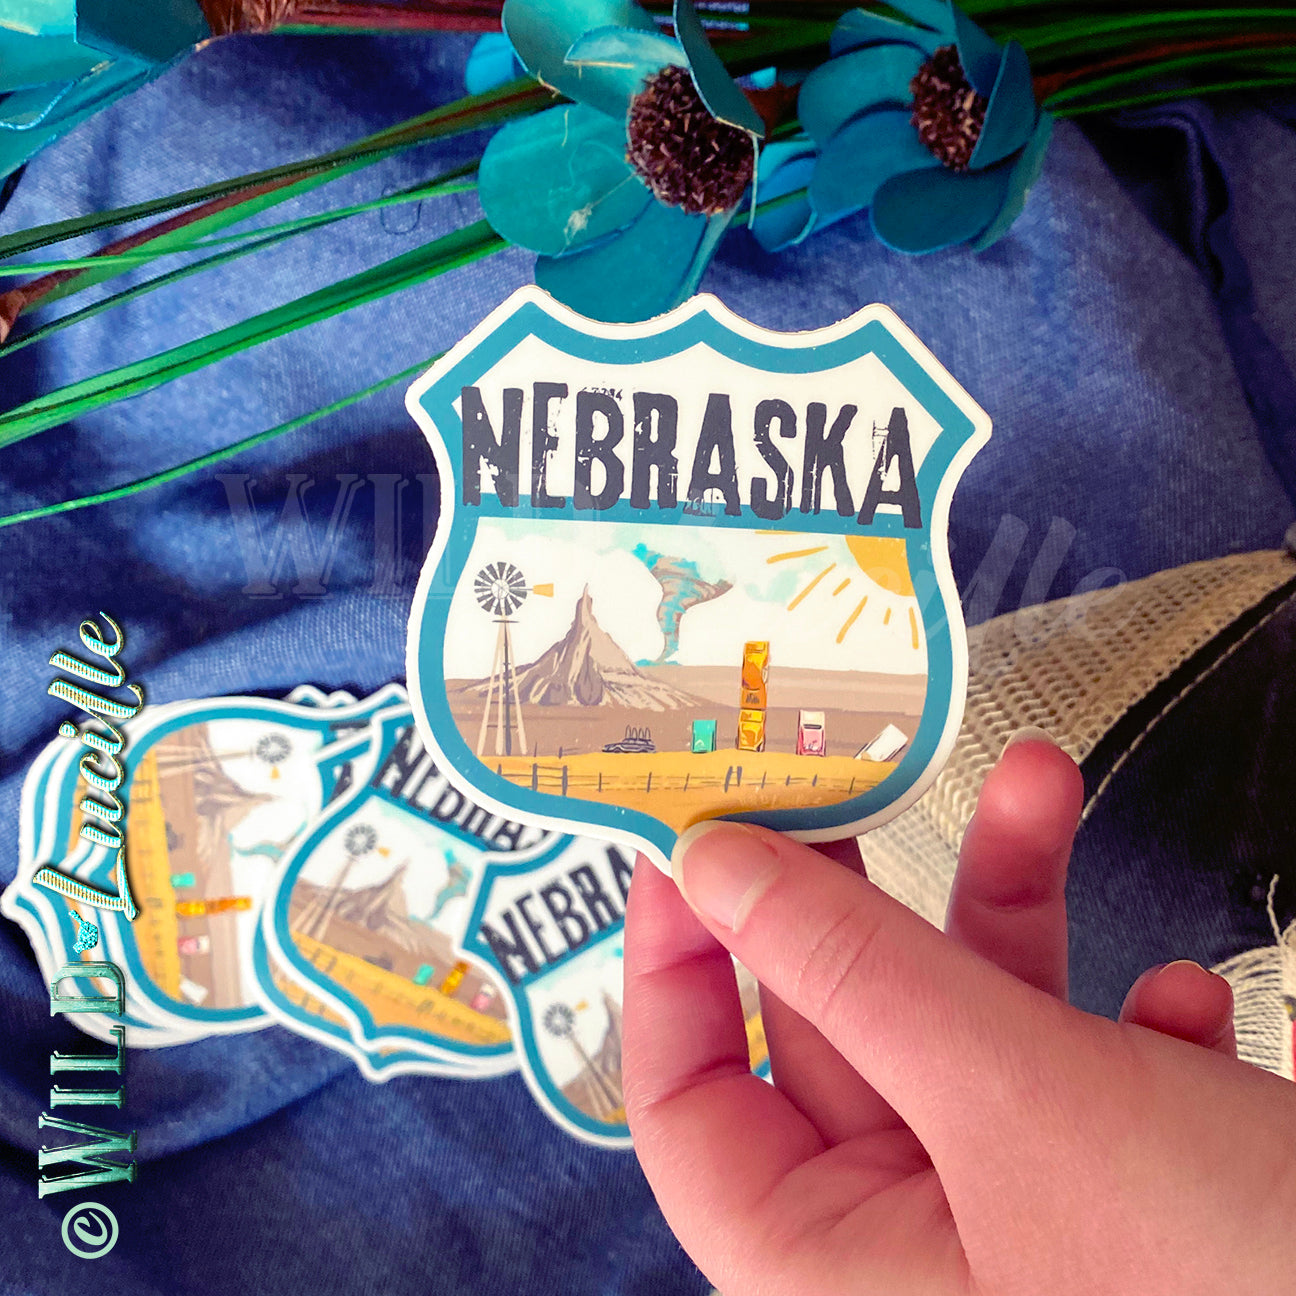 Destination Nebraska - Vinyl Souvenir Sticker Decals